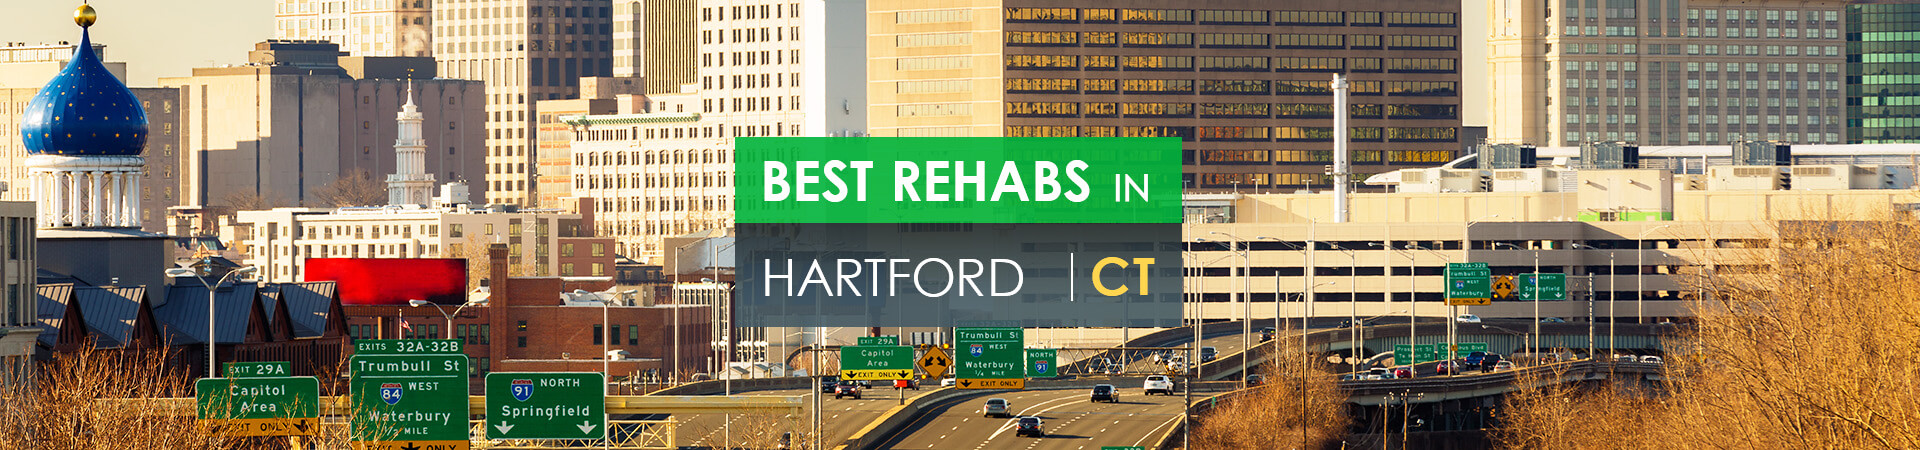 Best rehabs in Hartford, CT